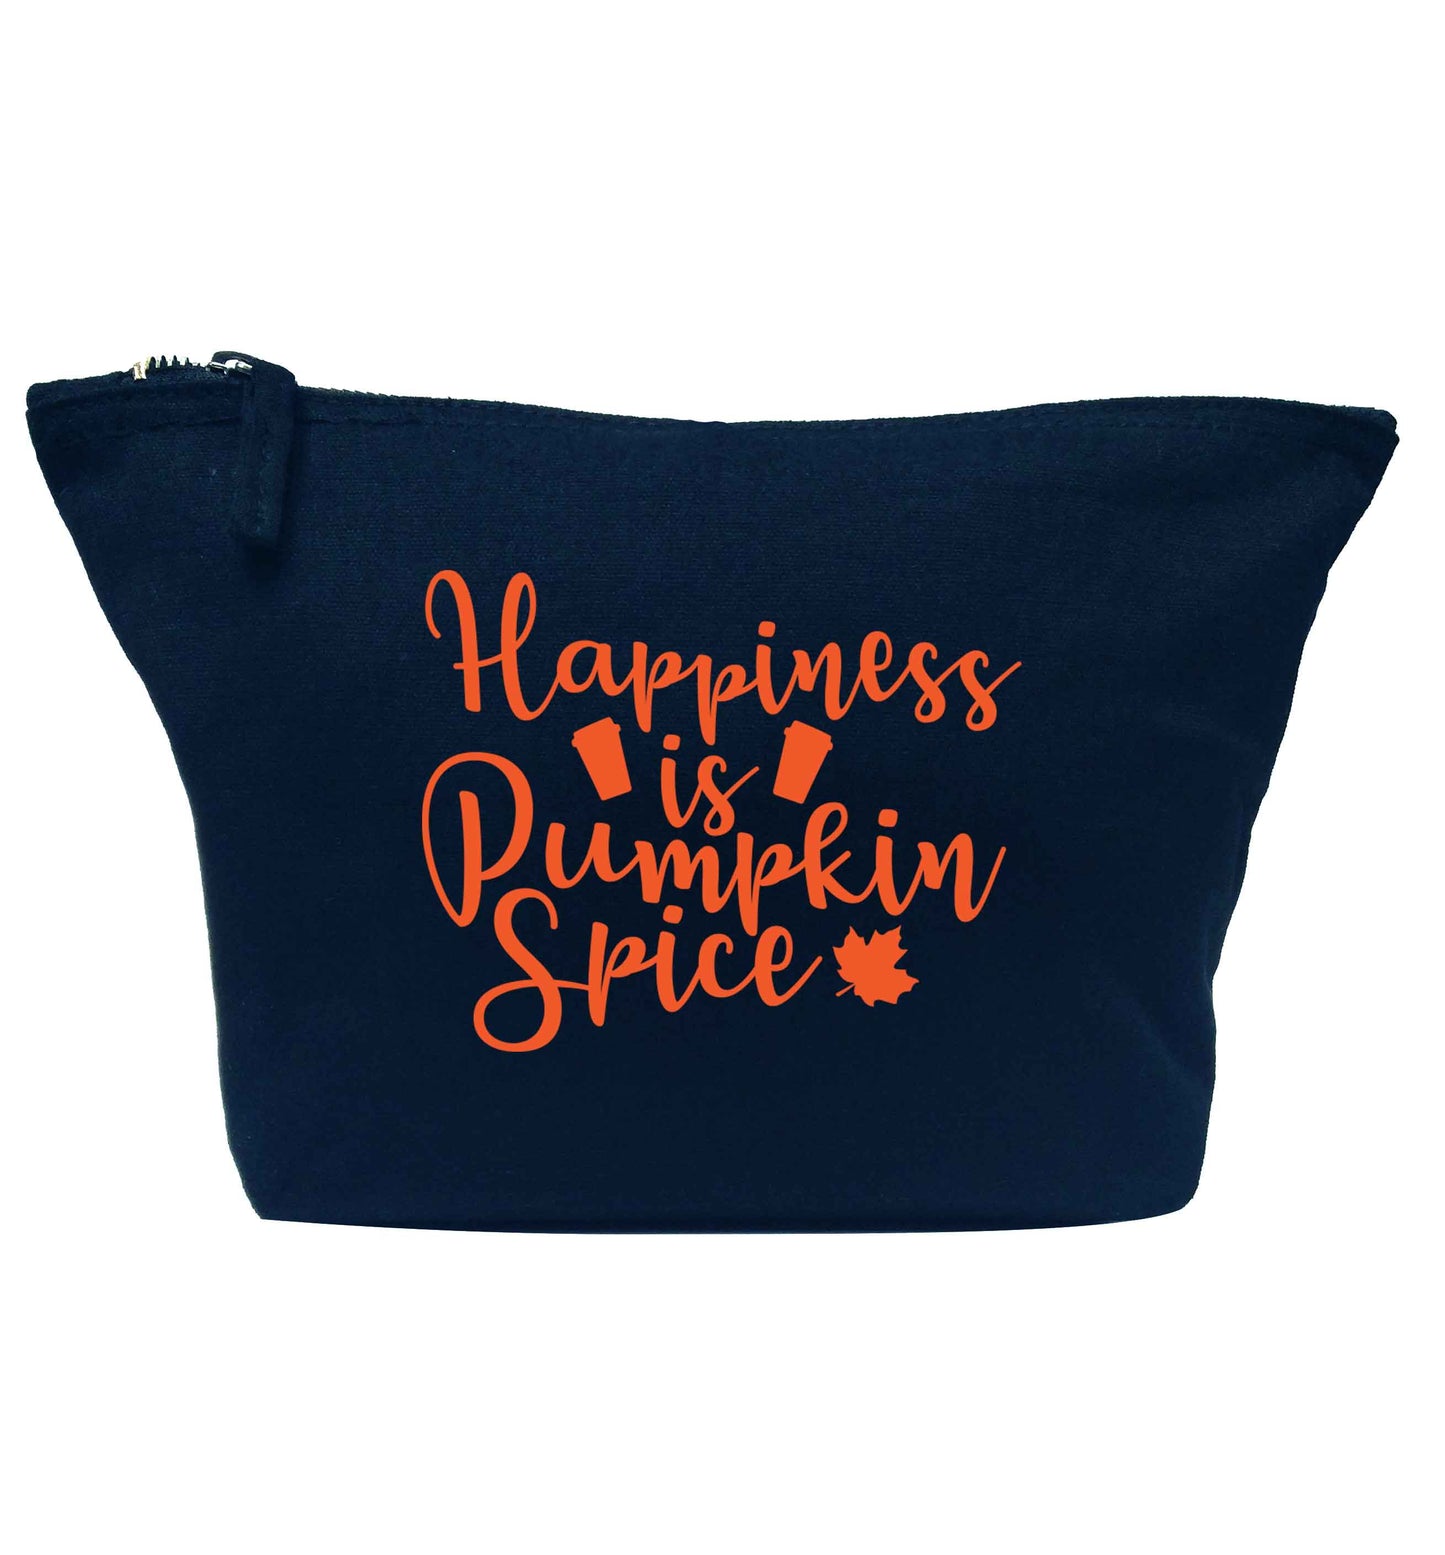 Happiness Pumpkin Spice navy makeup bag